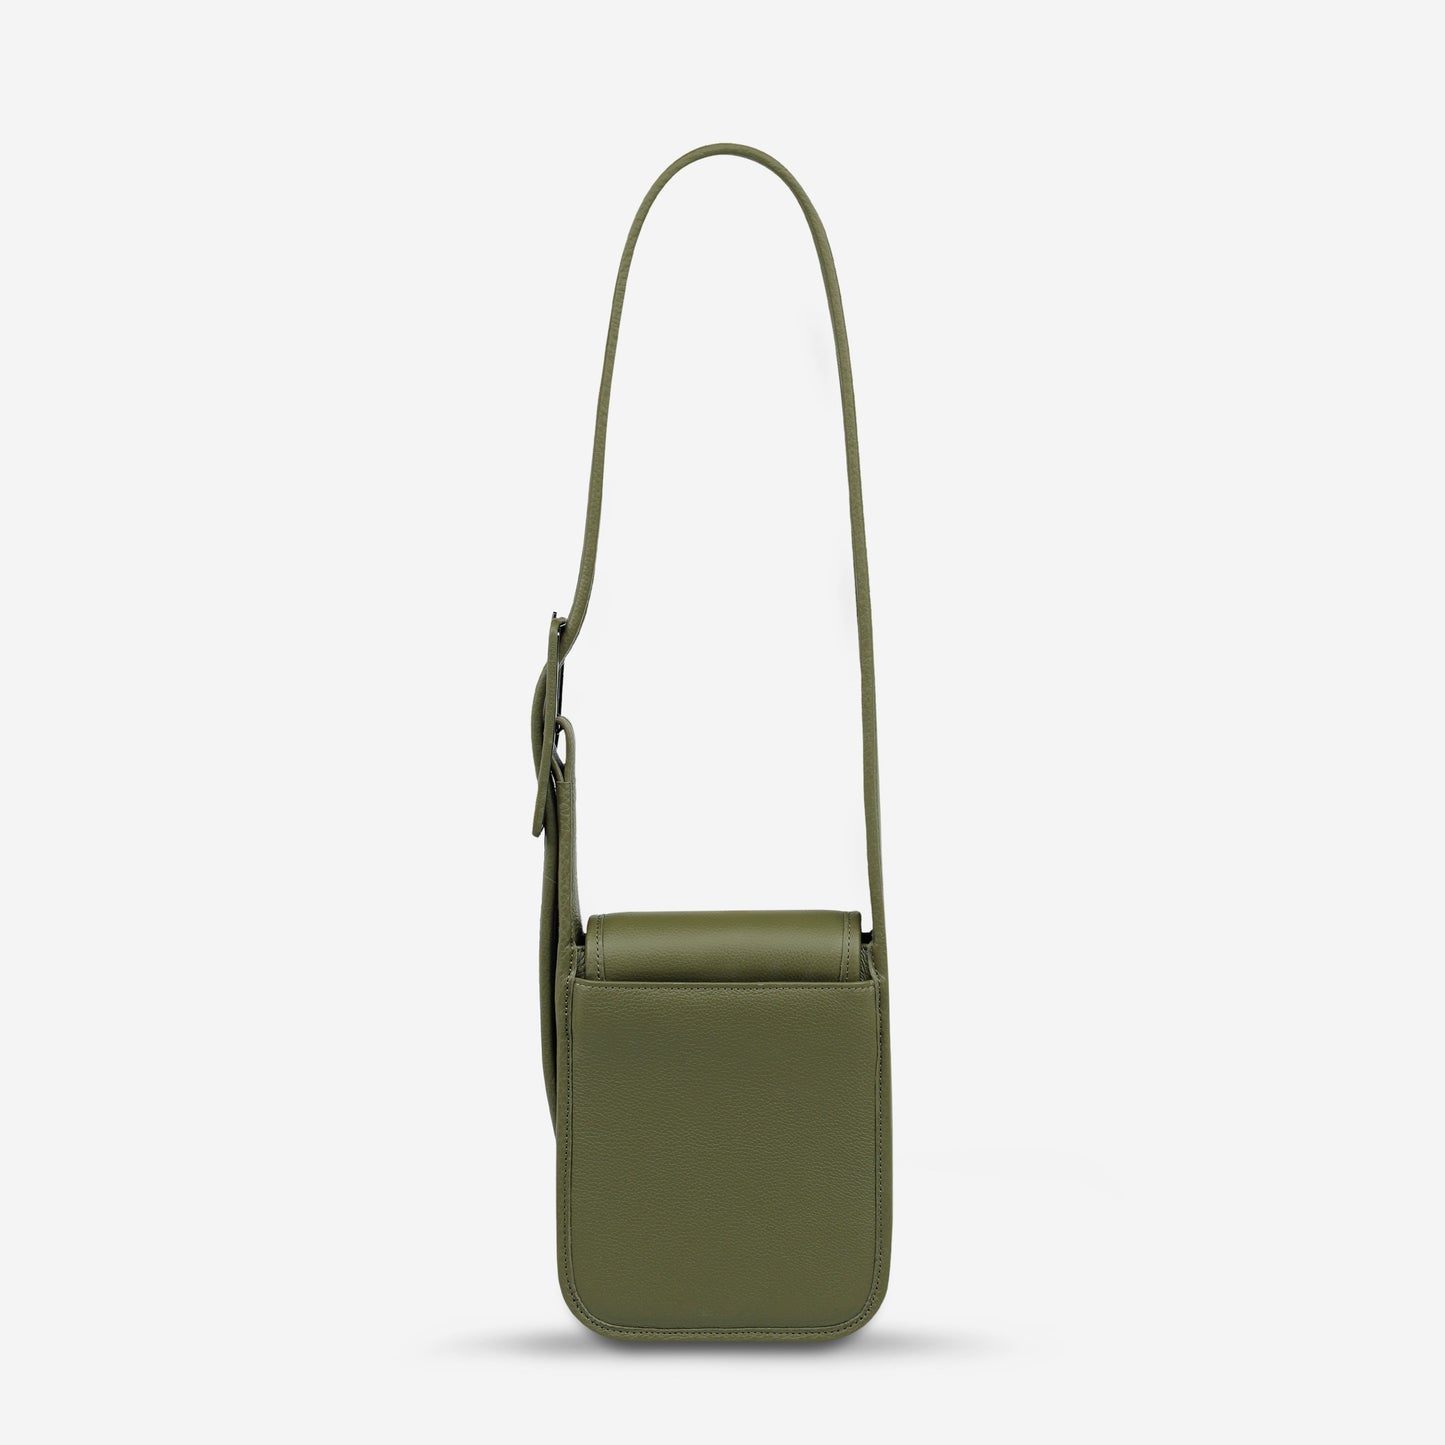 Perplex Leather Bag - Khaki